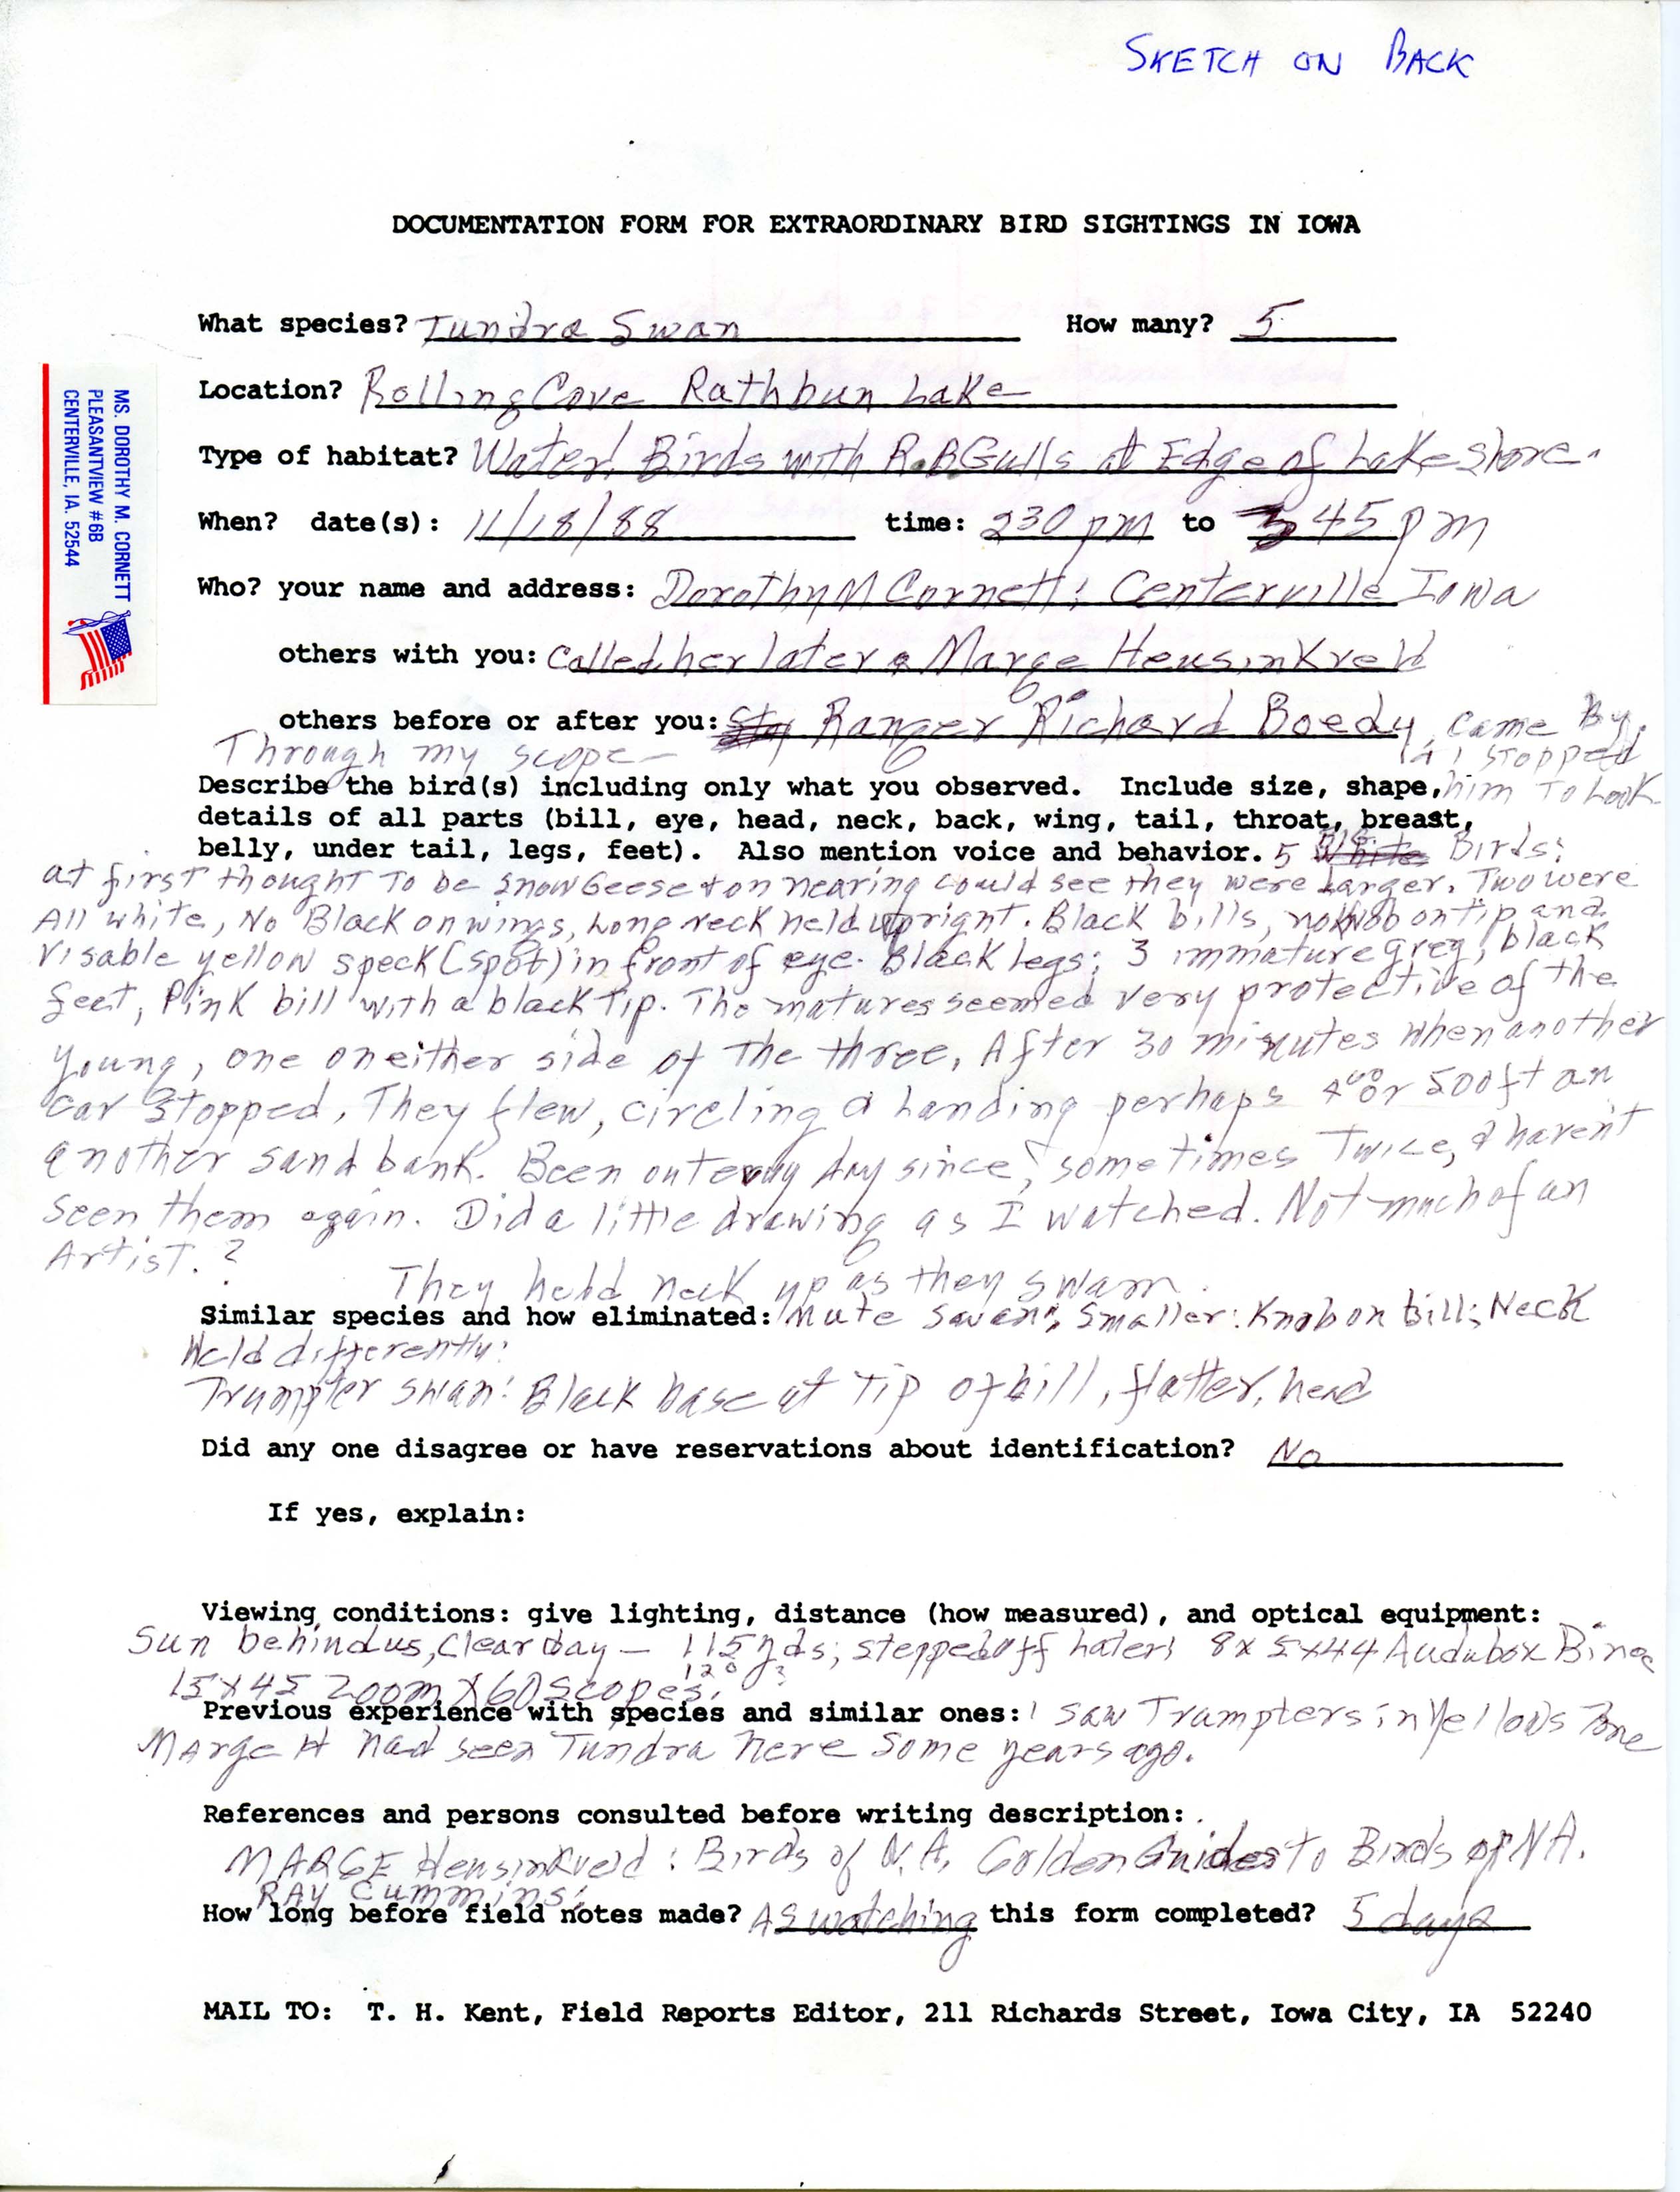 Rare bird documentation form for Tundra Swan at Rathbun Lake, 1988